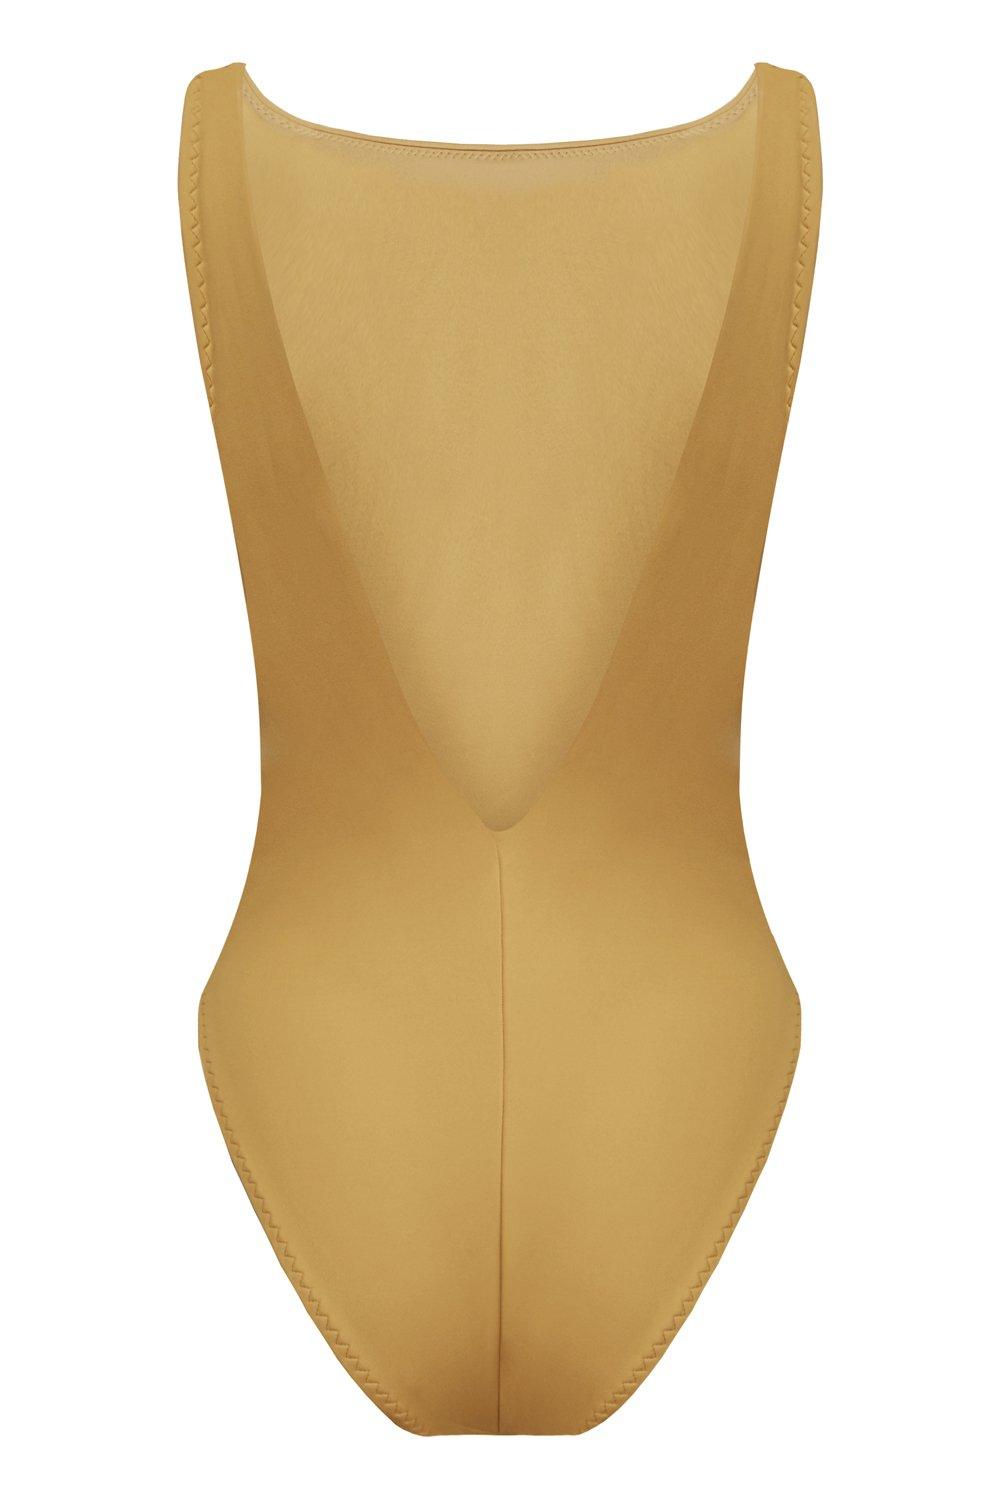 Vertex Golden Beige swimsuit - yesUndress